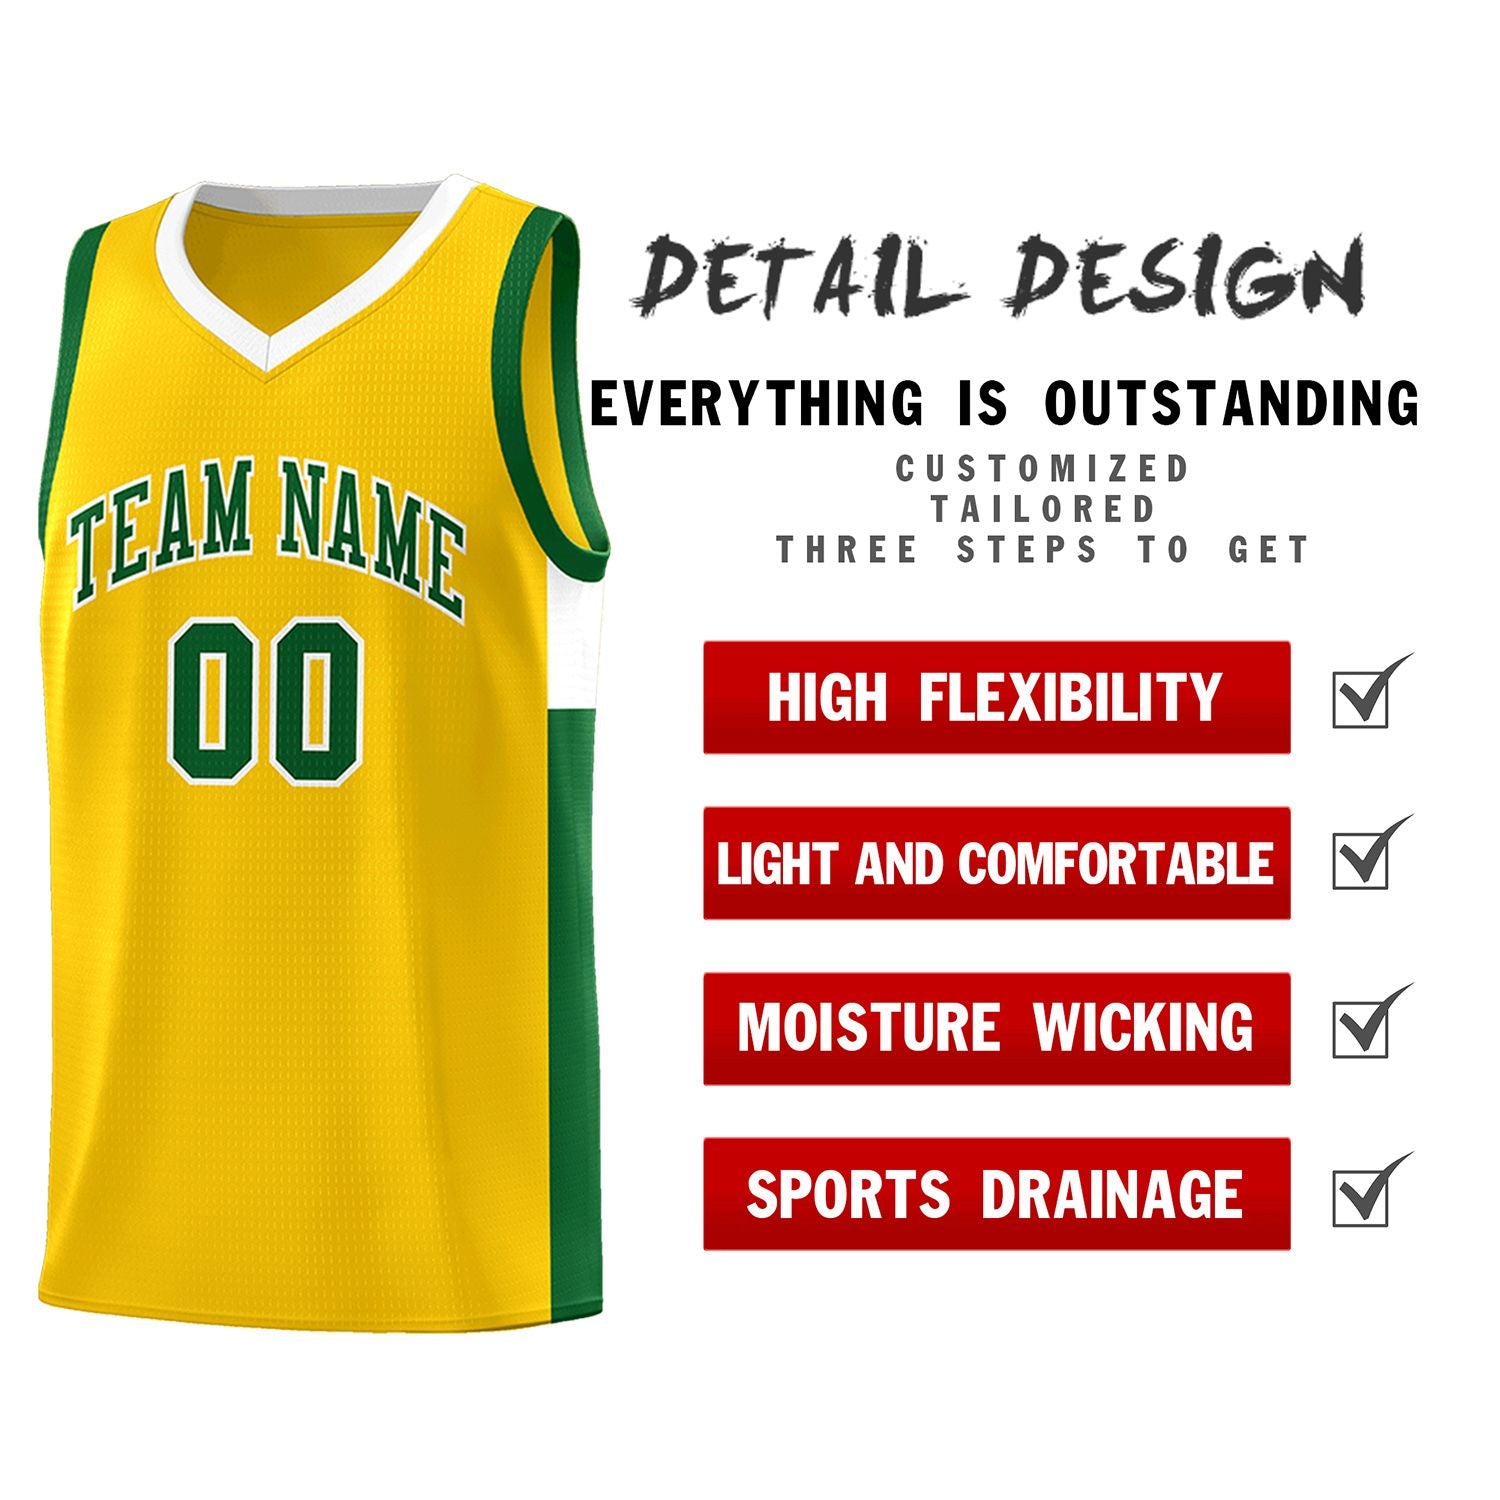 Custom Gold Green-White Side Two-Tone Classic Sports Uniform Basketball Jersey